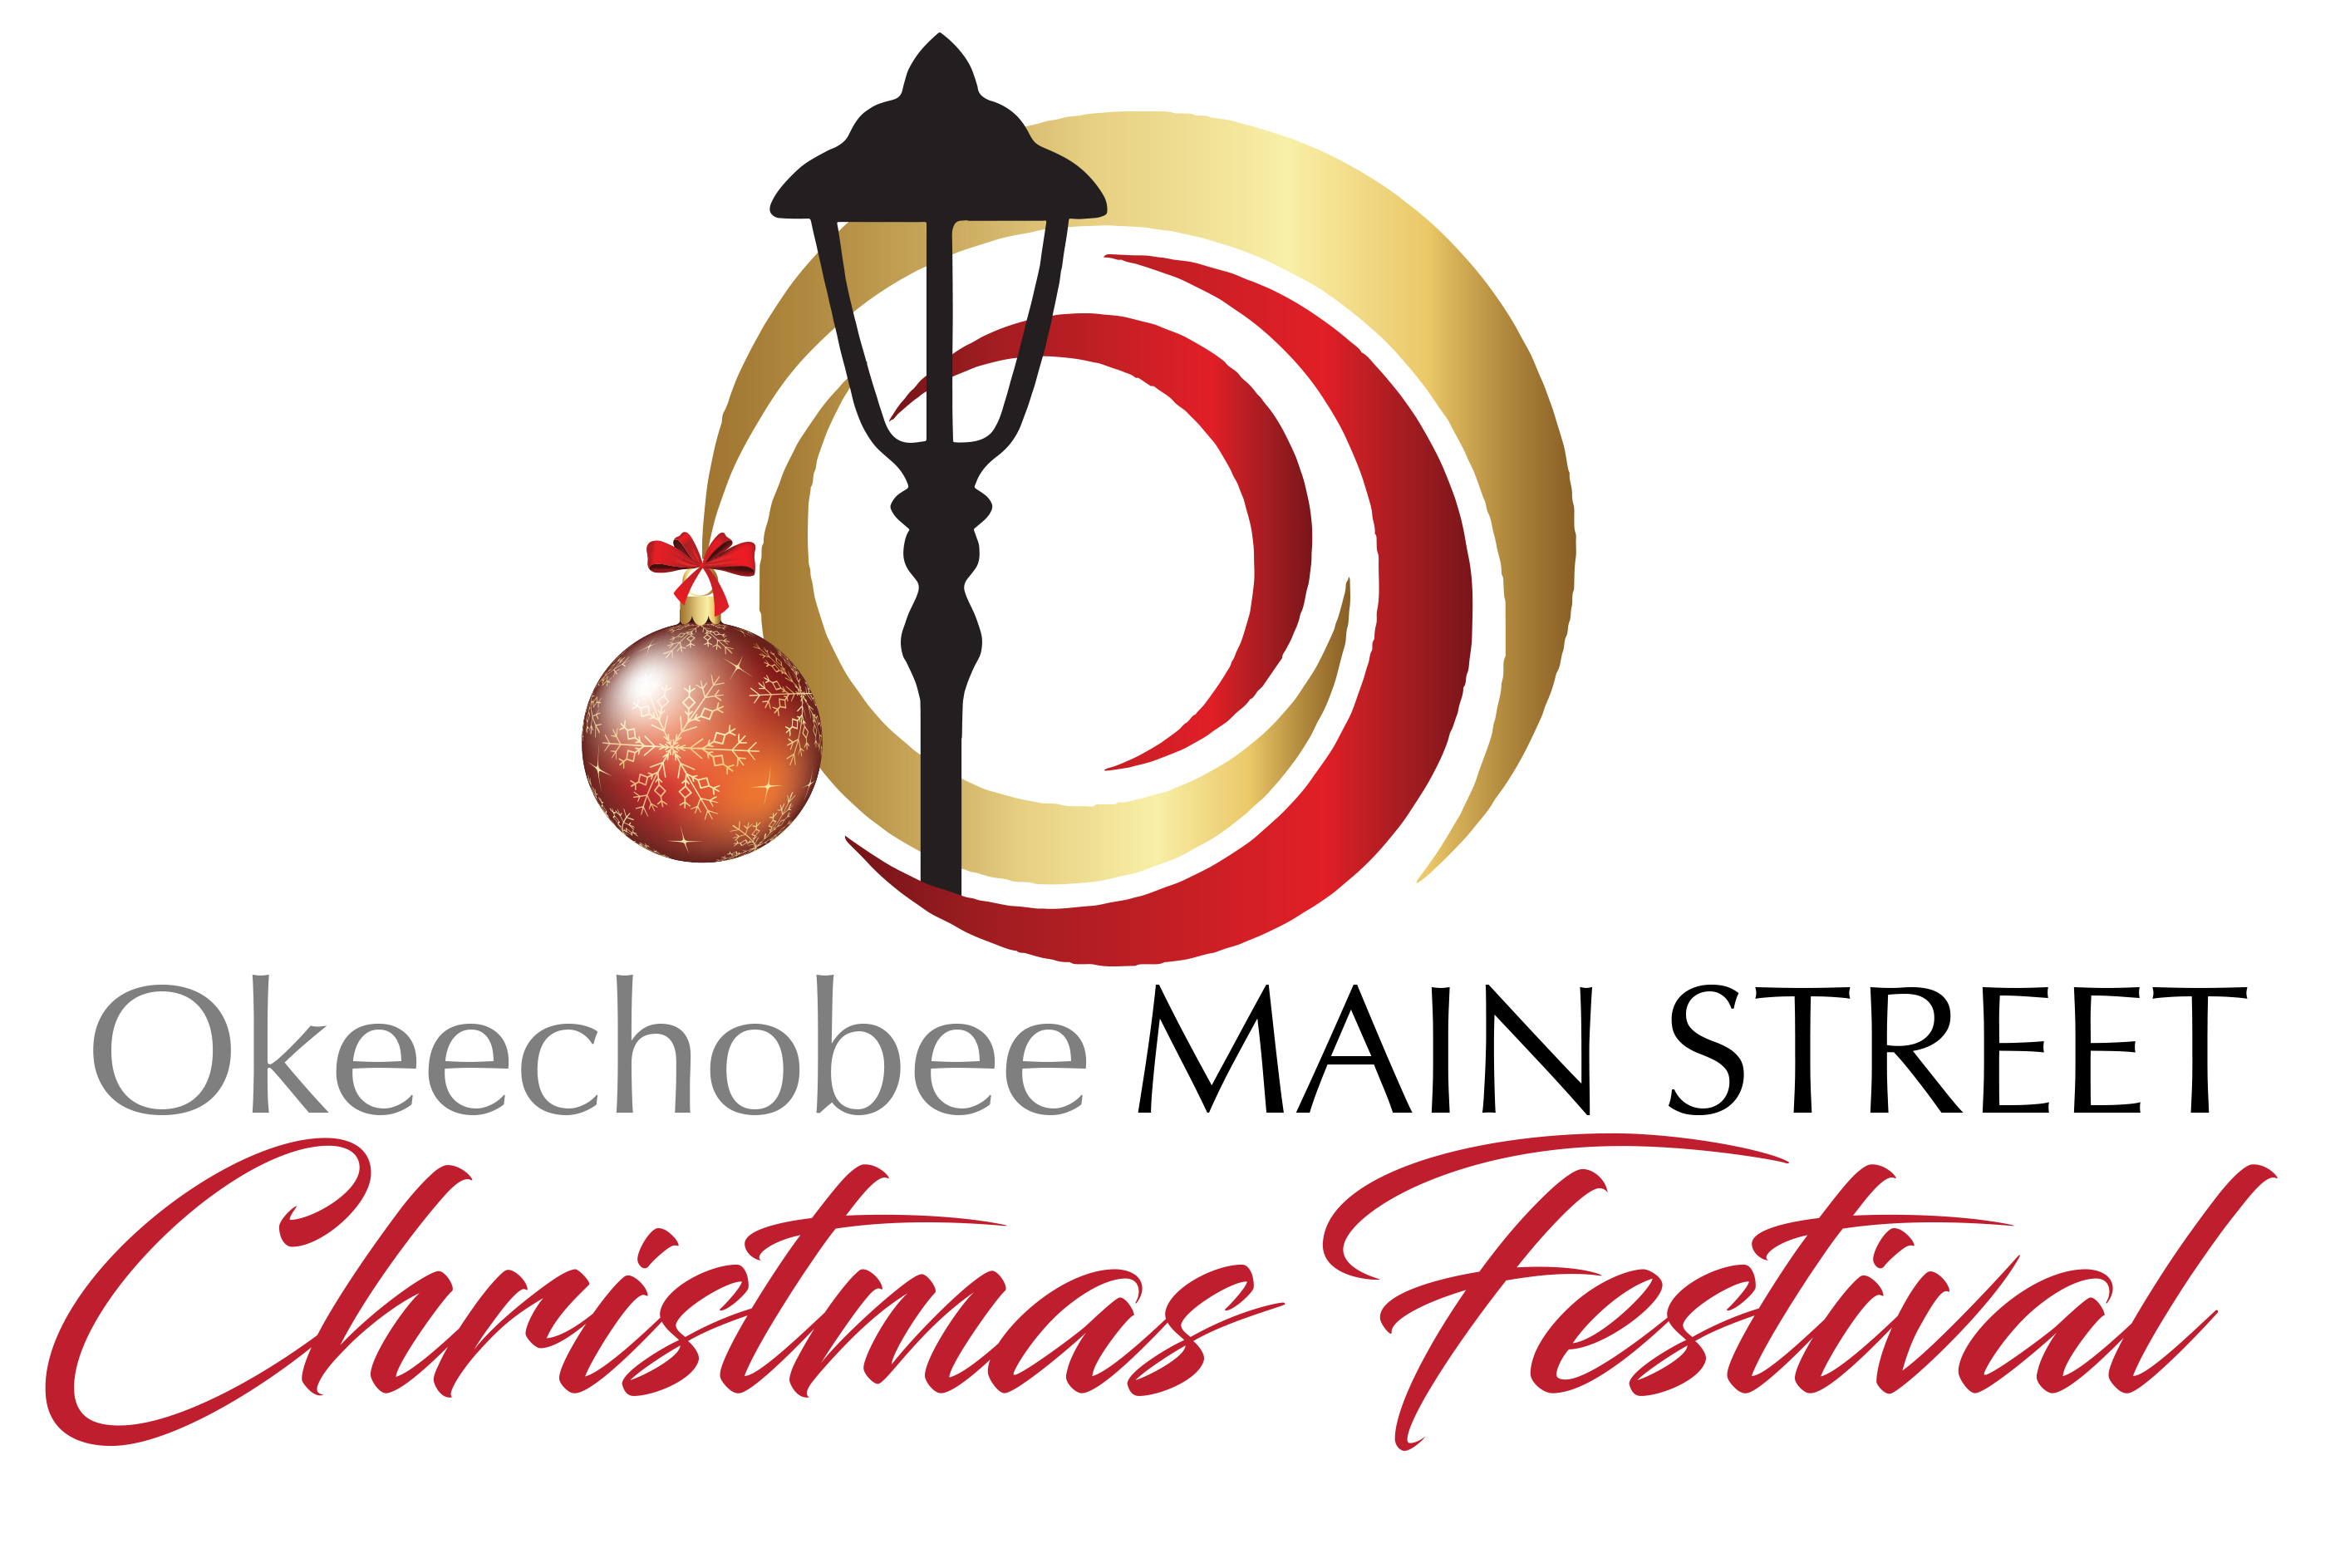 Okeechobee Main Street Inc. Christmas Festival & Parade